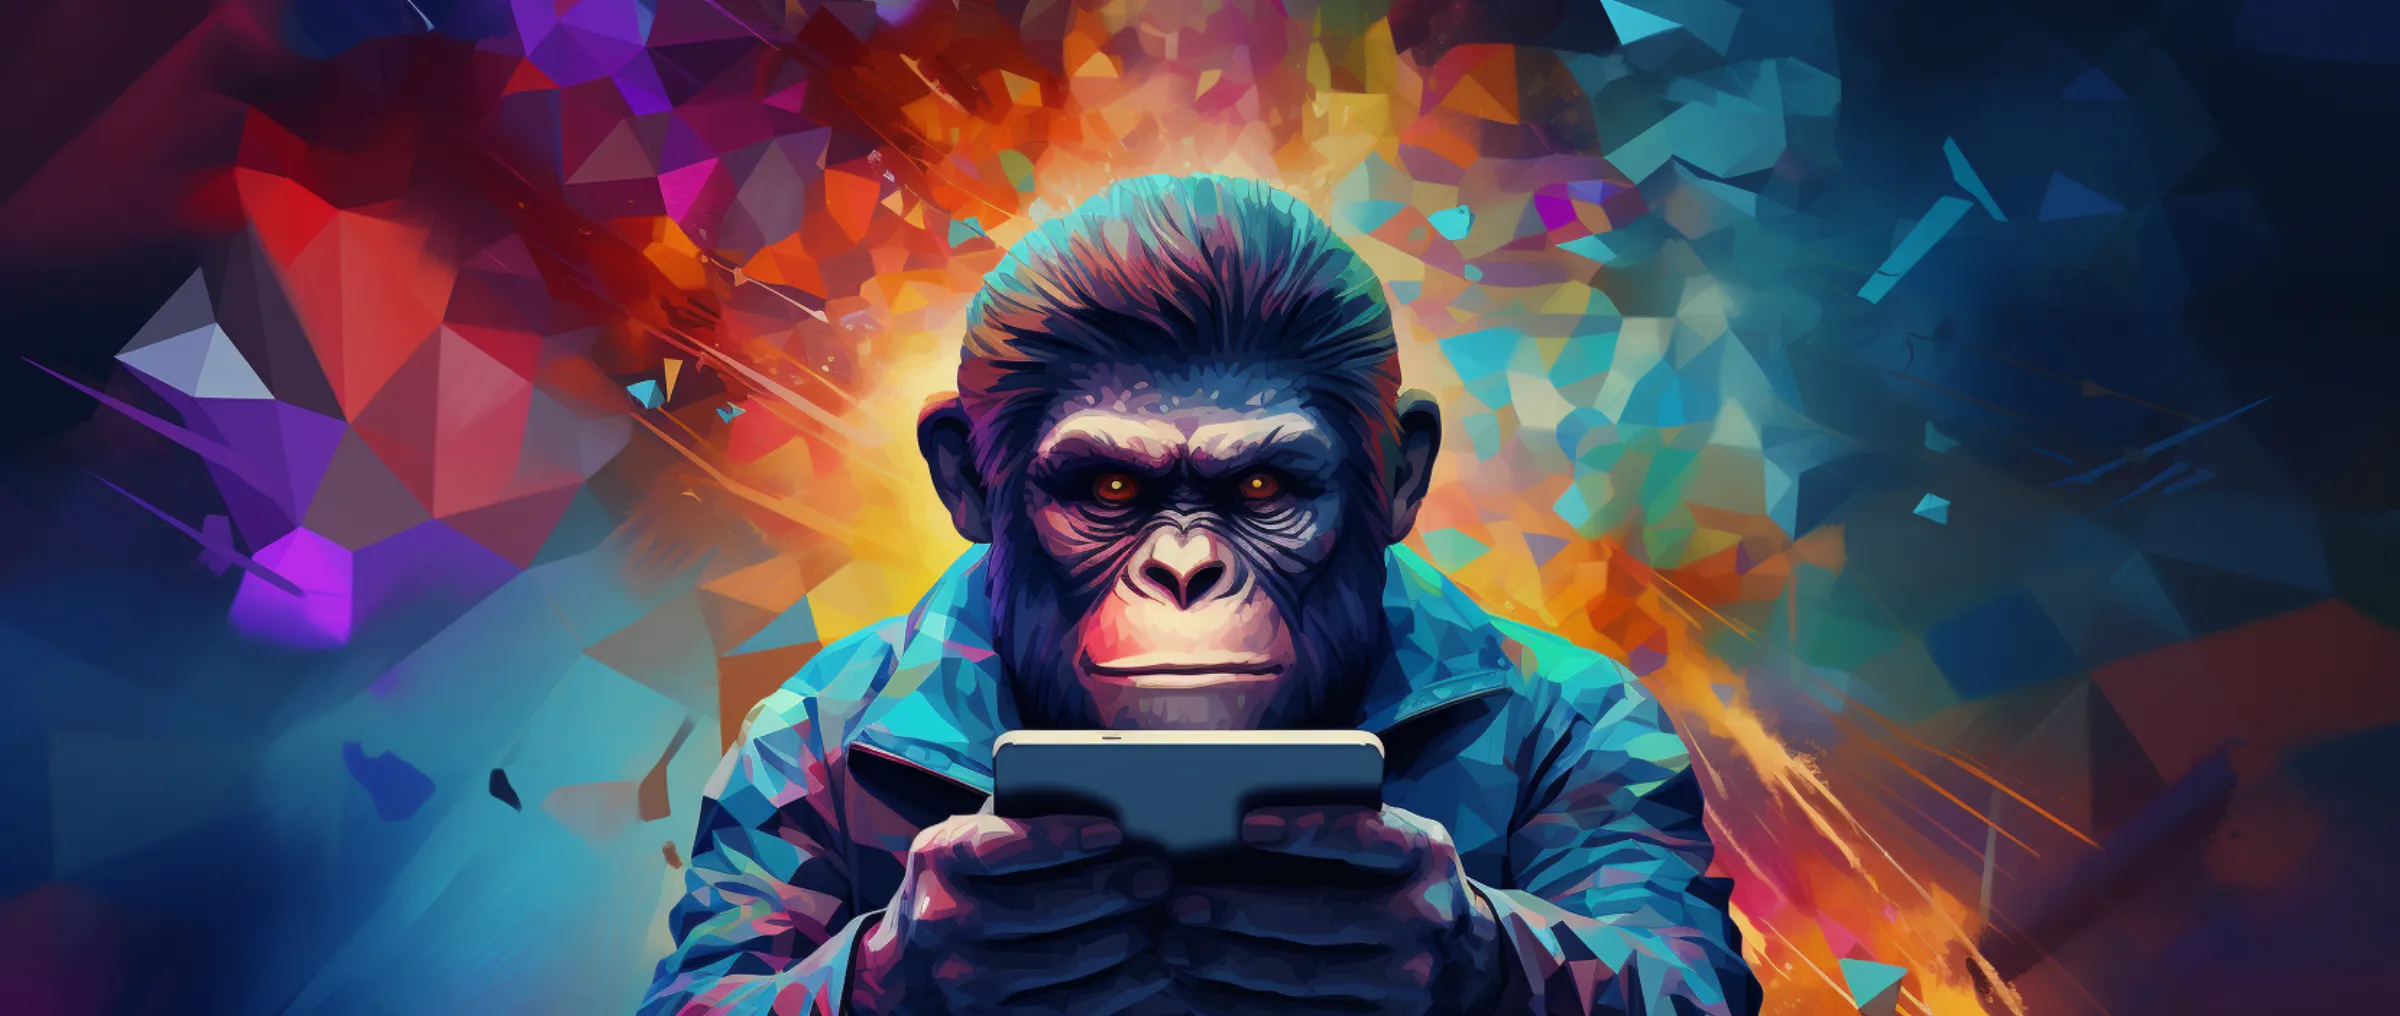 The NFT hacker saga: art, deception and the return of the monkeys